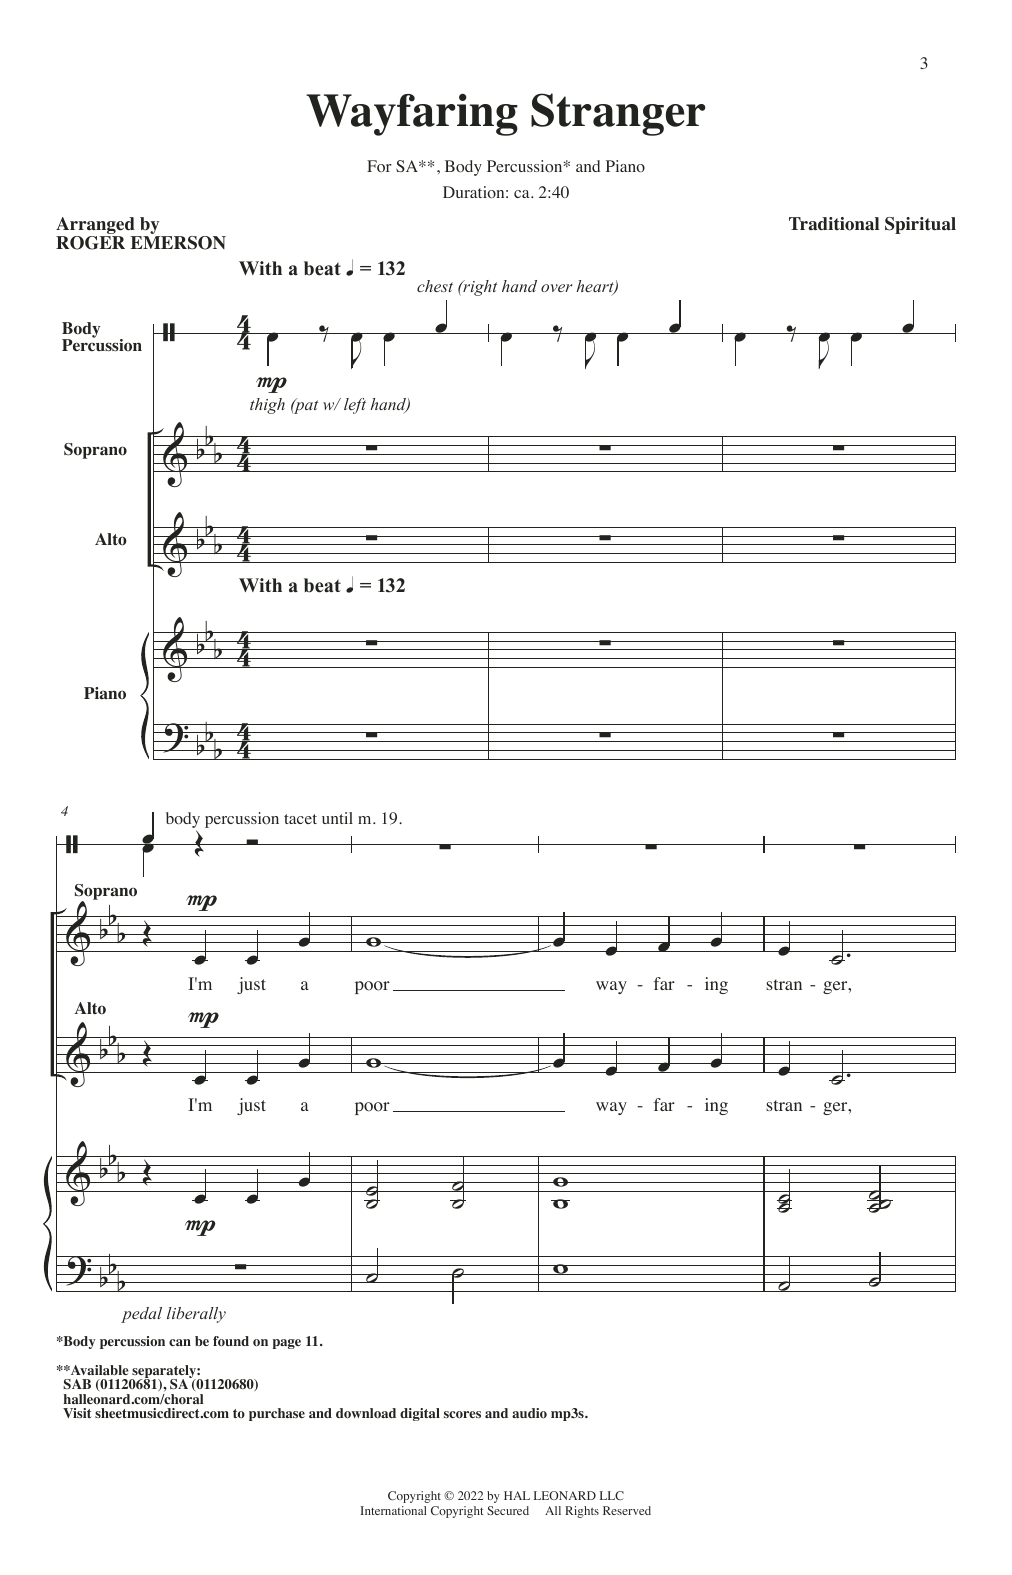 Traditional Spiritual Wayfaring Stranger (arr. Roger Emerson) Sheet Music Notes & Chords for Choir - Download or Print PDF